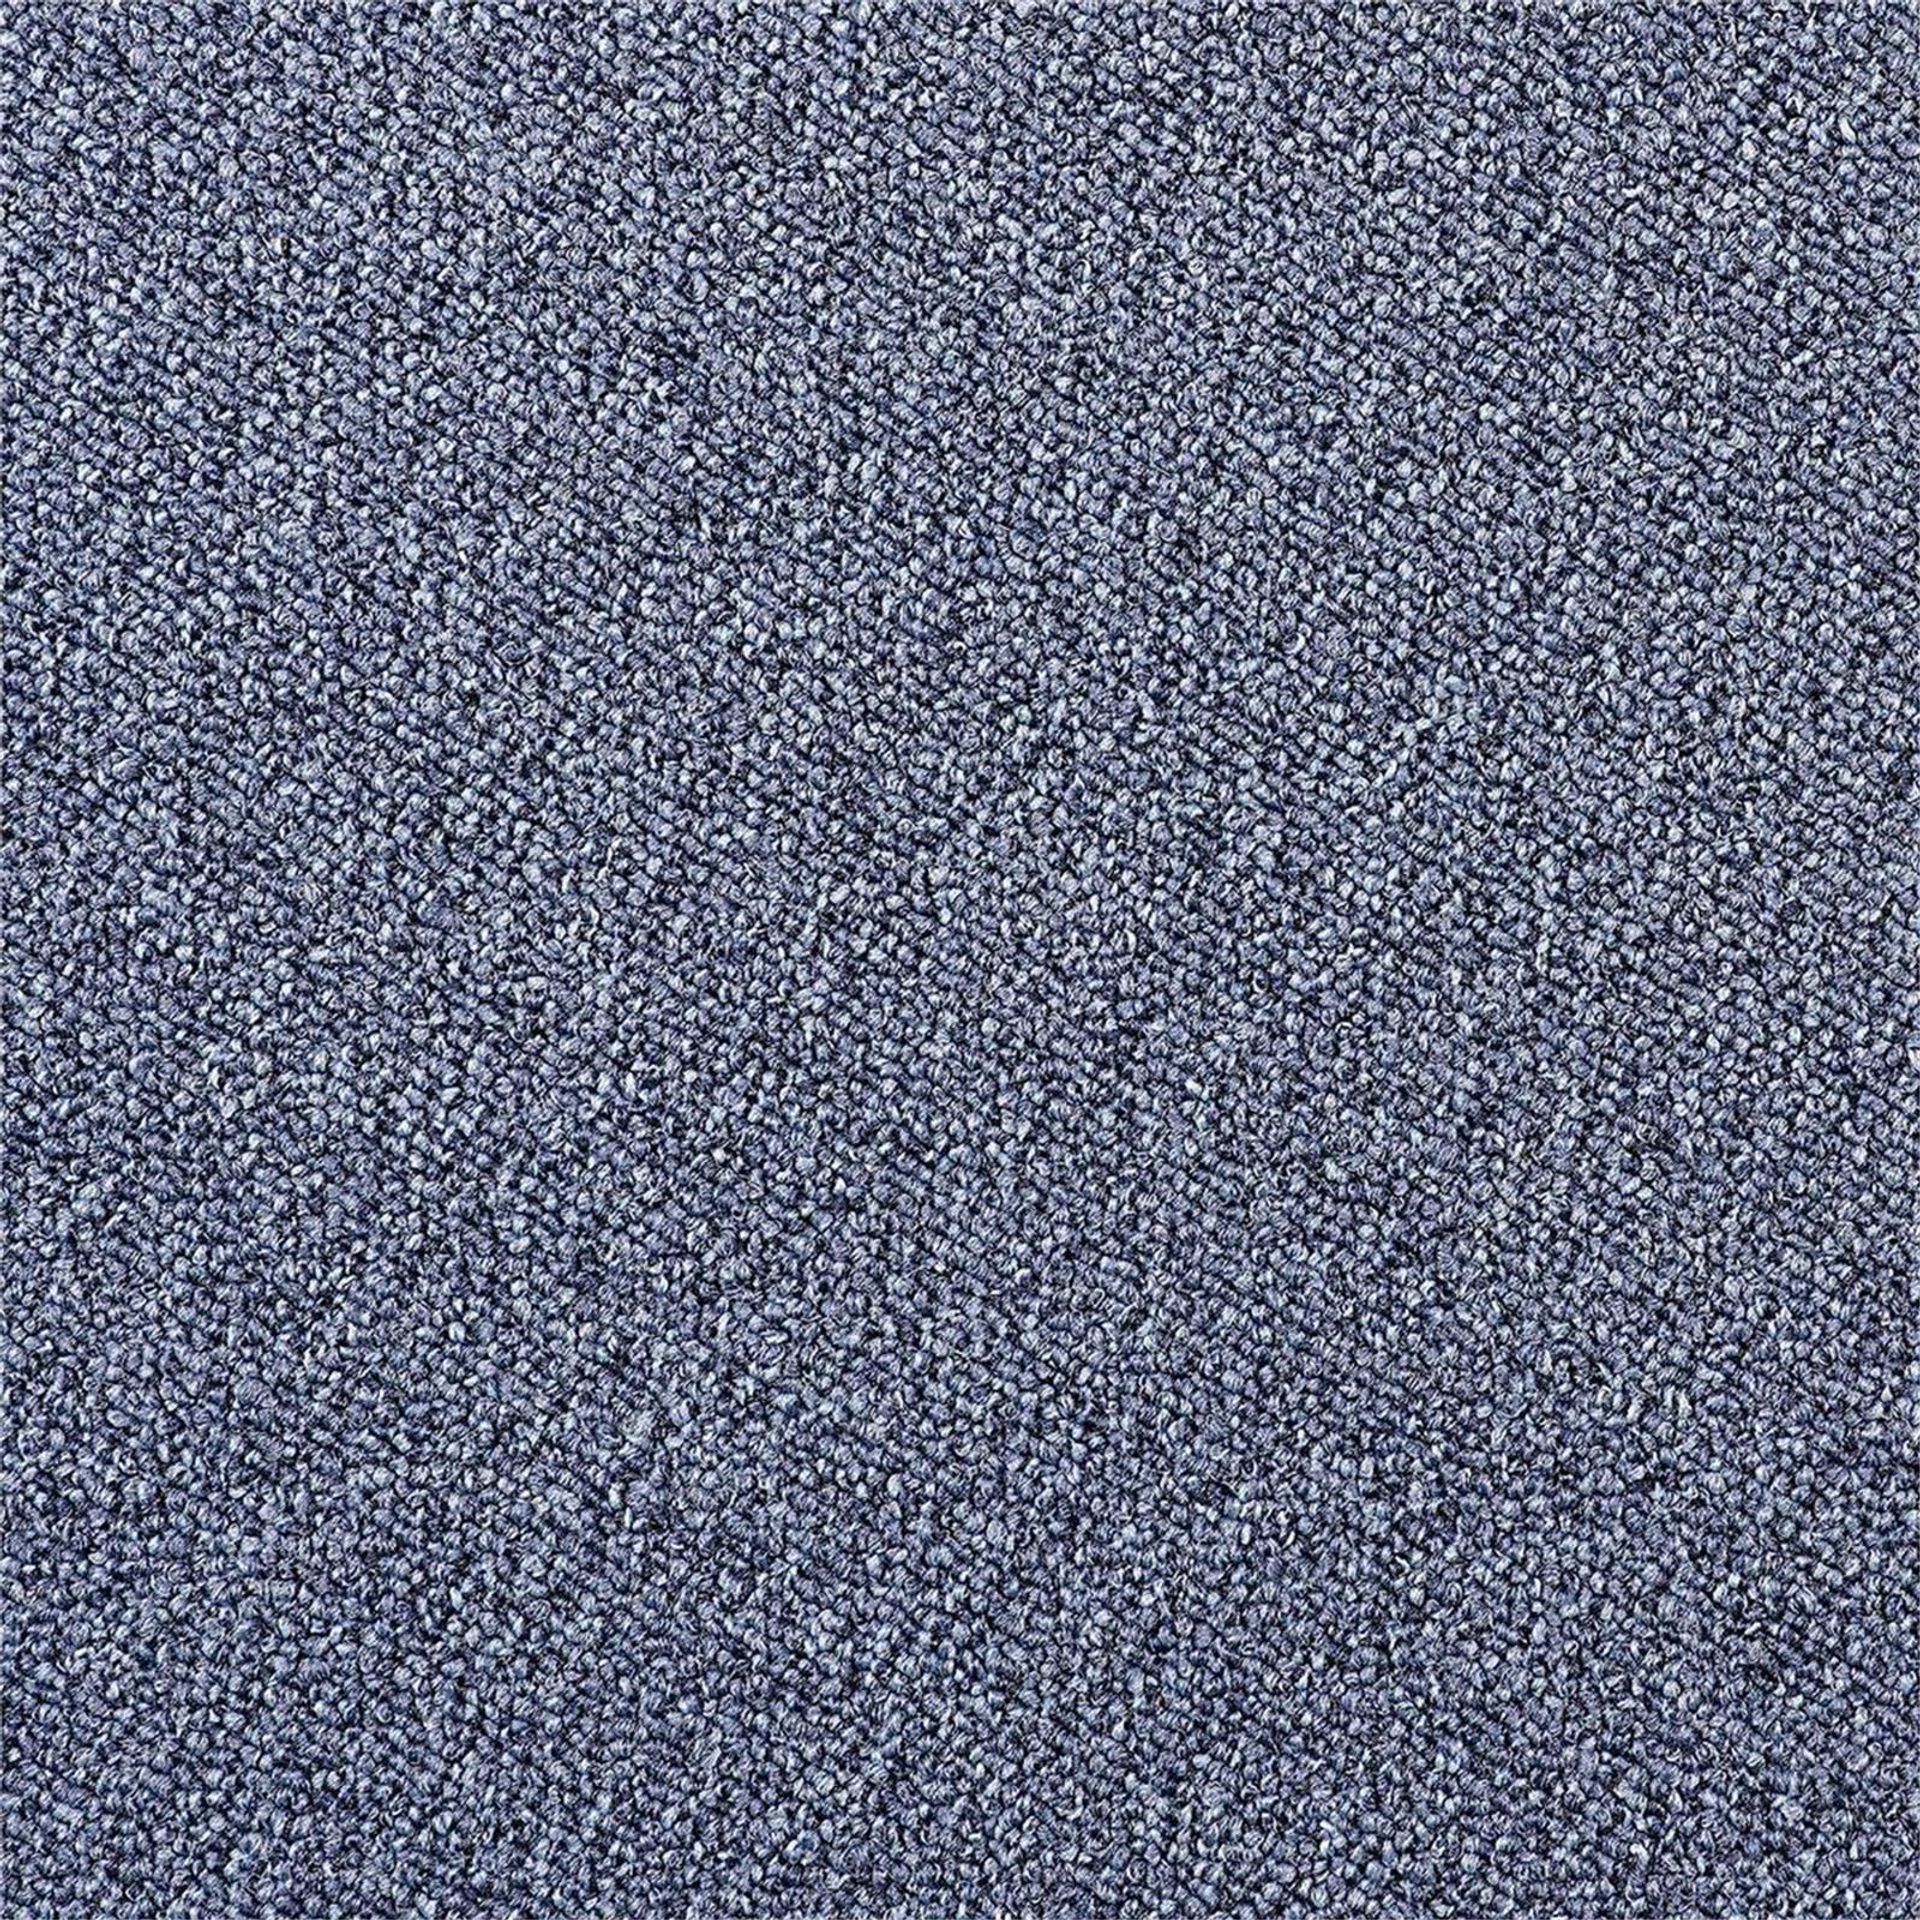 Teppichboden Infloor-Girloon Compact Schlinge Blau 343 meliert - Rollenbreite 400 cm